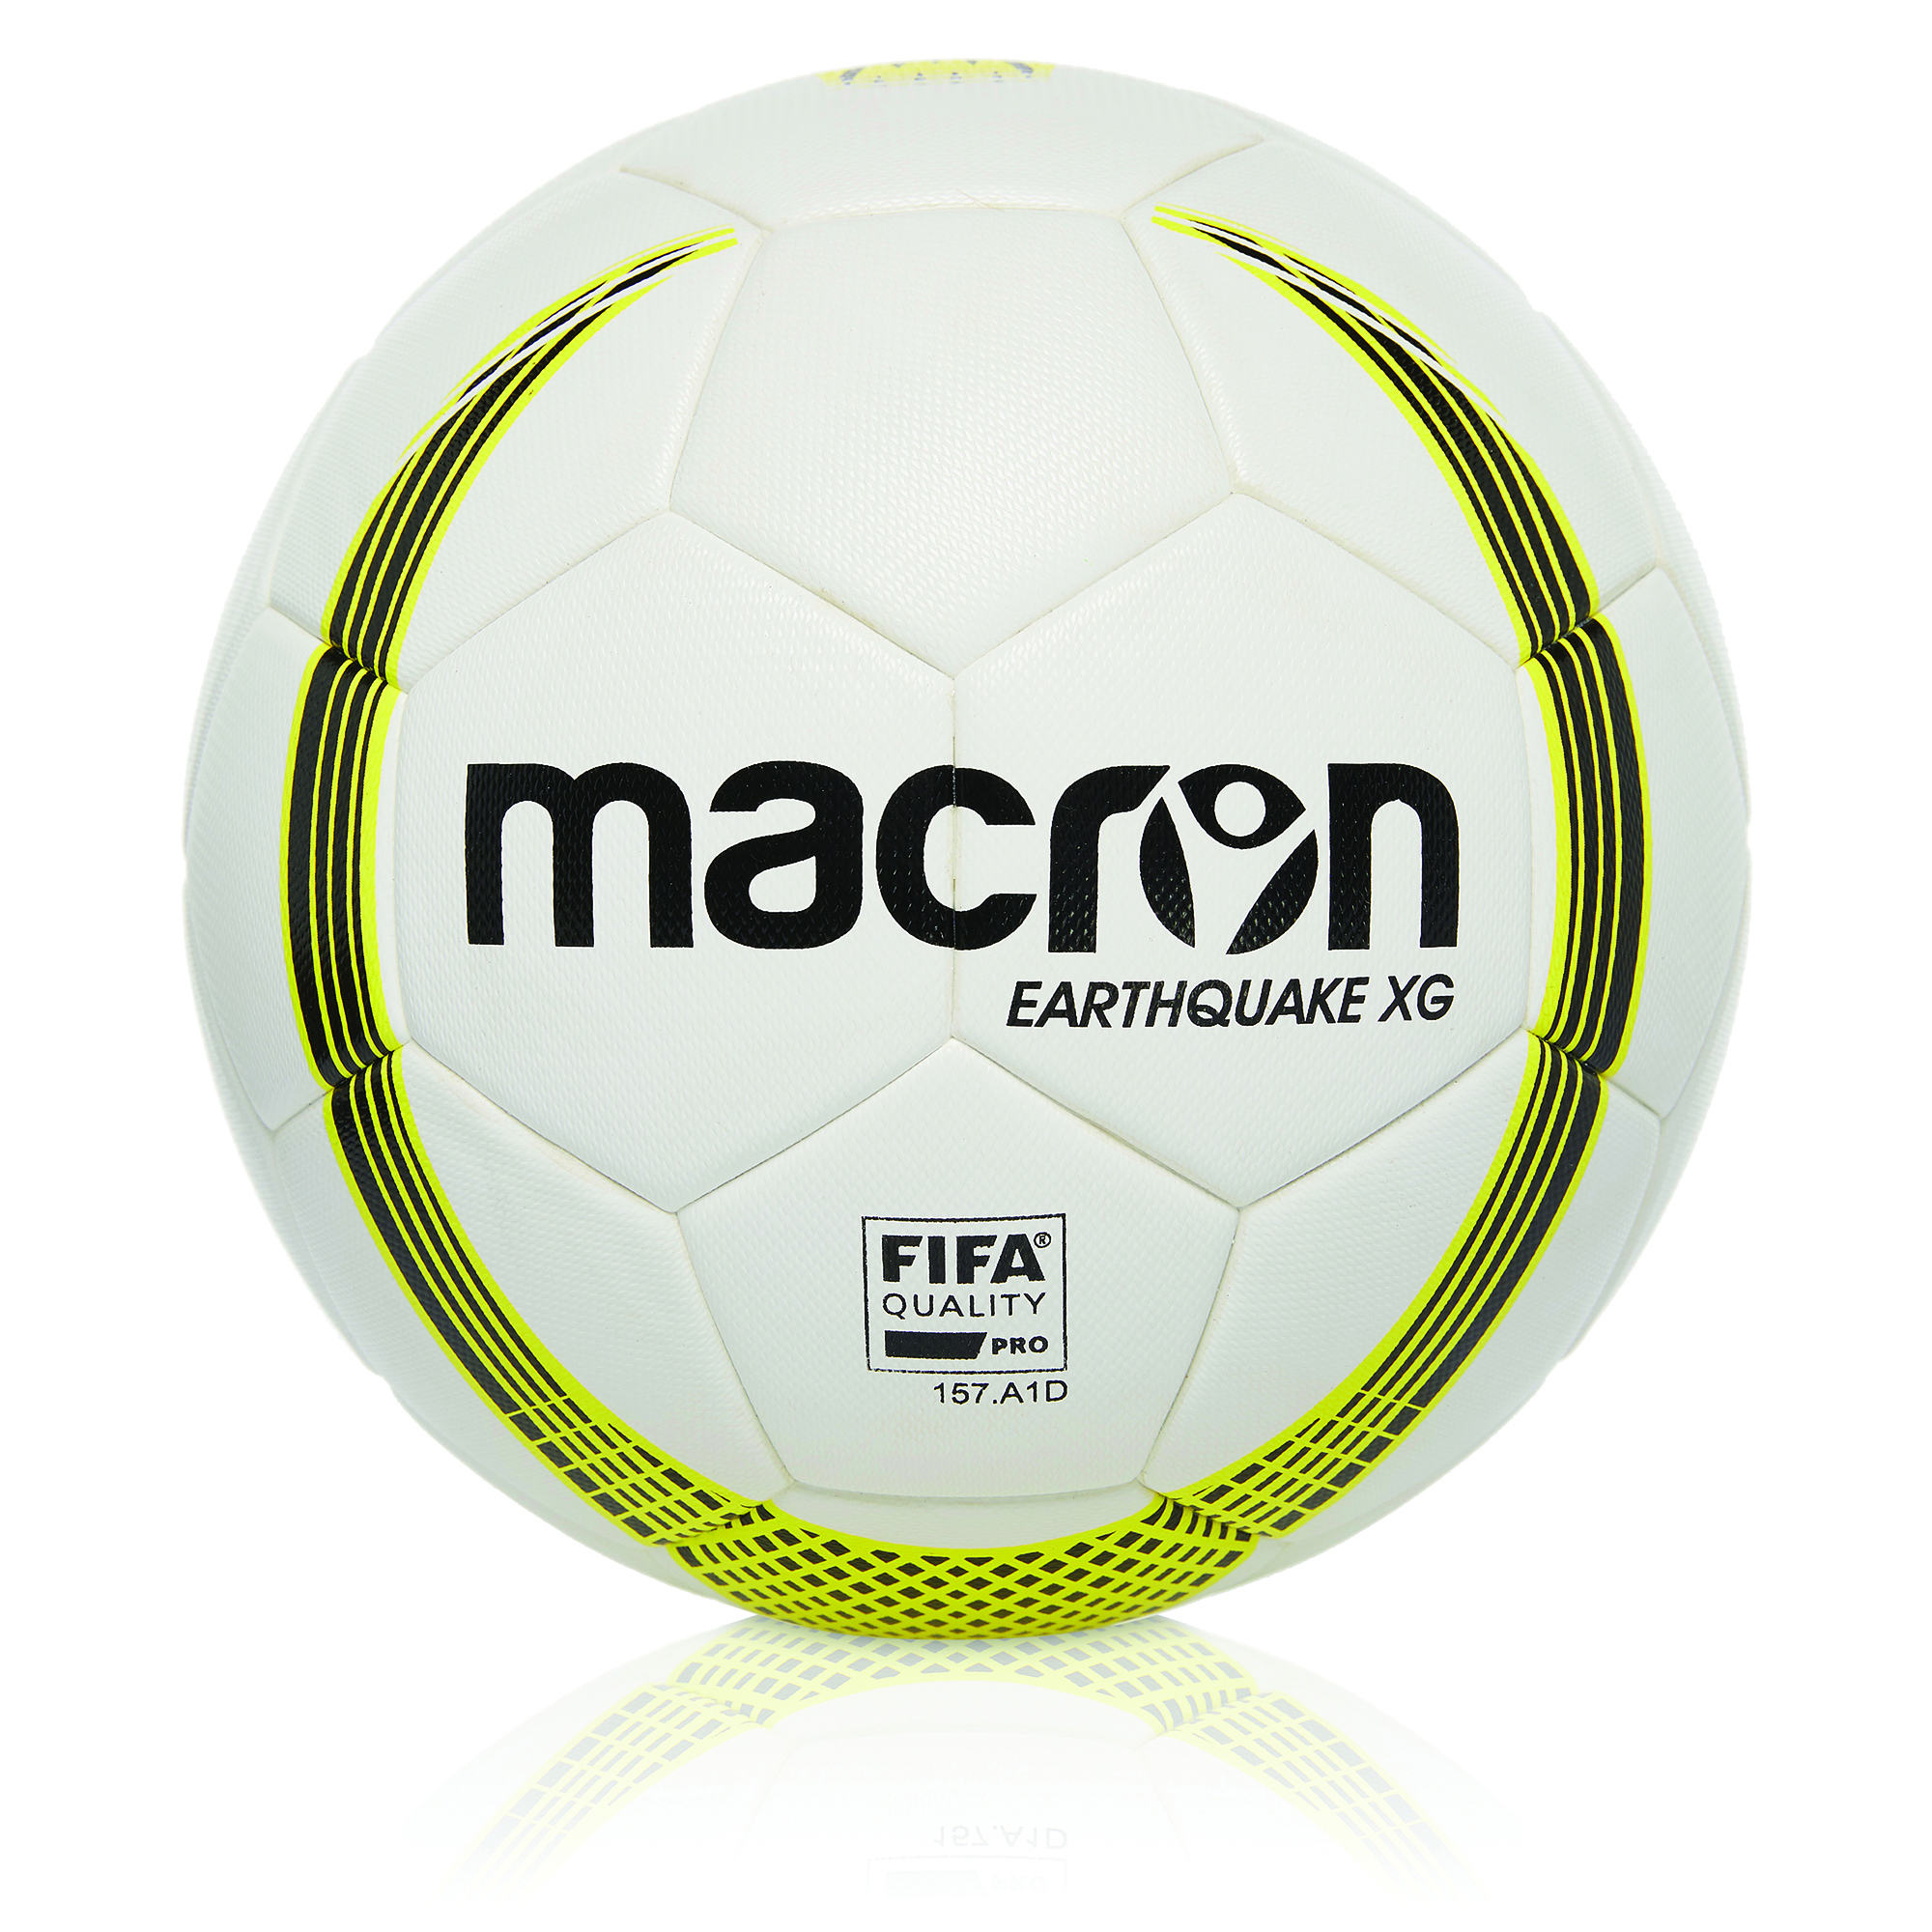 Fifa quality pro. Macron мяч. Мяч FIFA quality Pro. Макрон мяч футбольный. Мяч Macron earthquake XH (FIFA quality Pro.